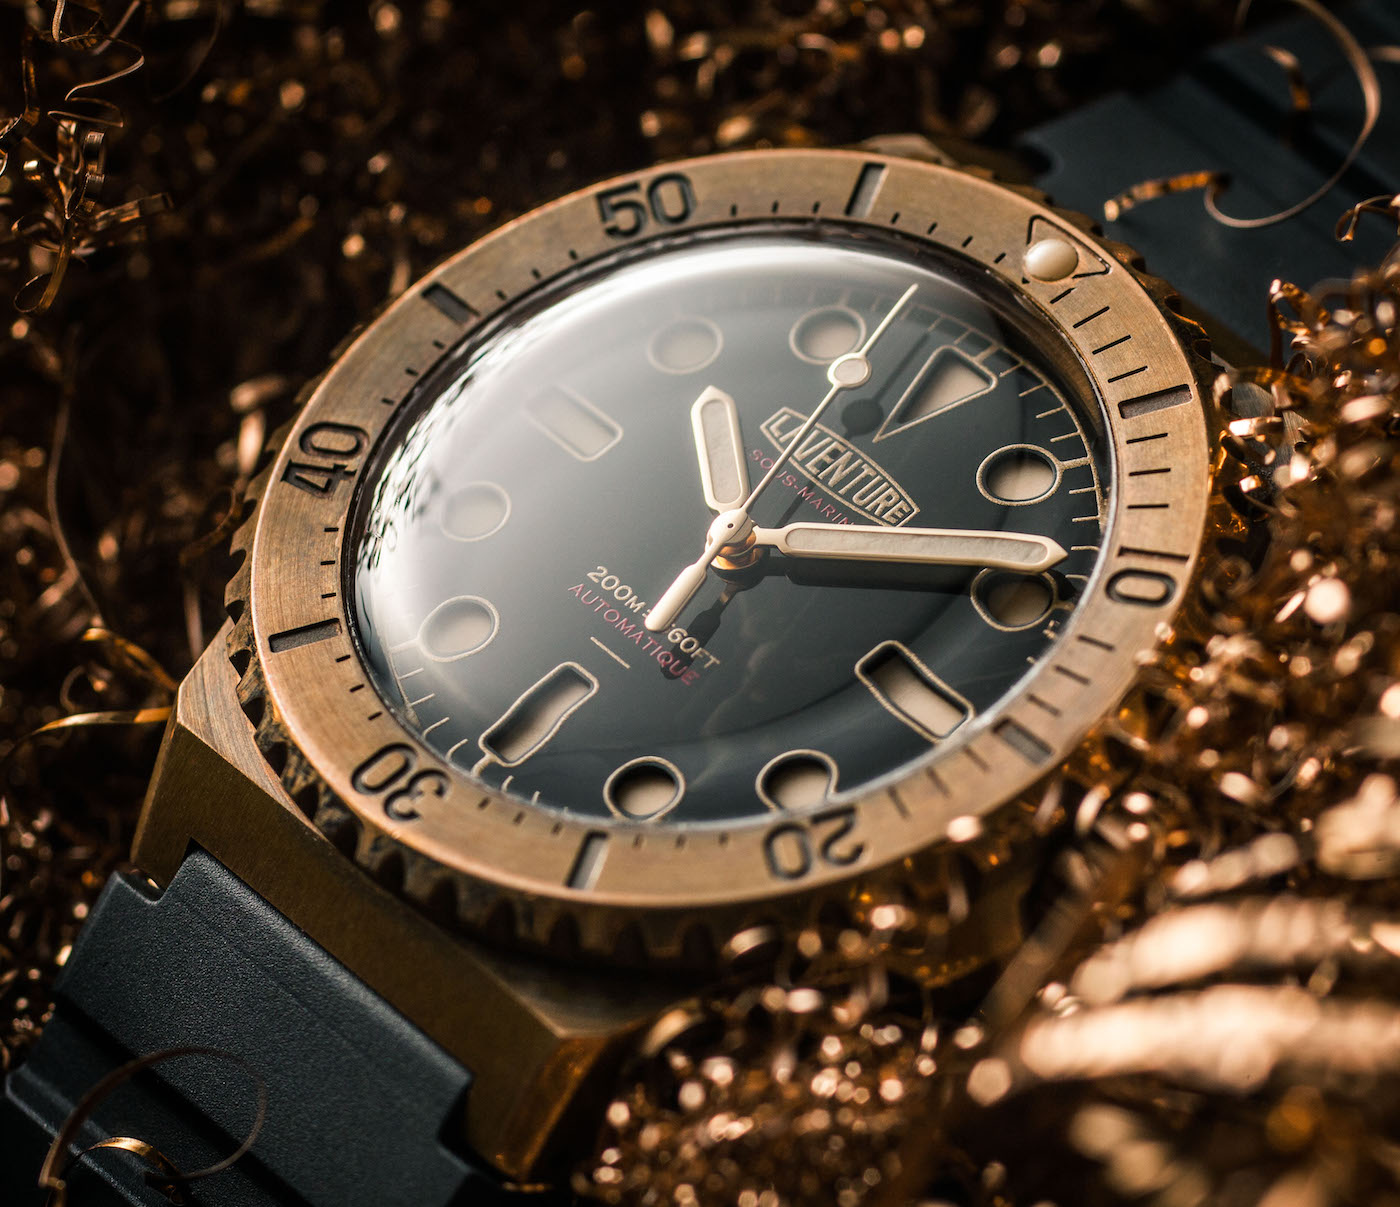 Laventure-Sous-Marine-Bronze-Watch-Filings